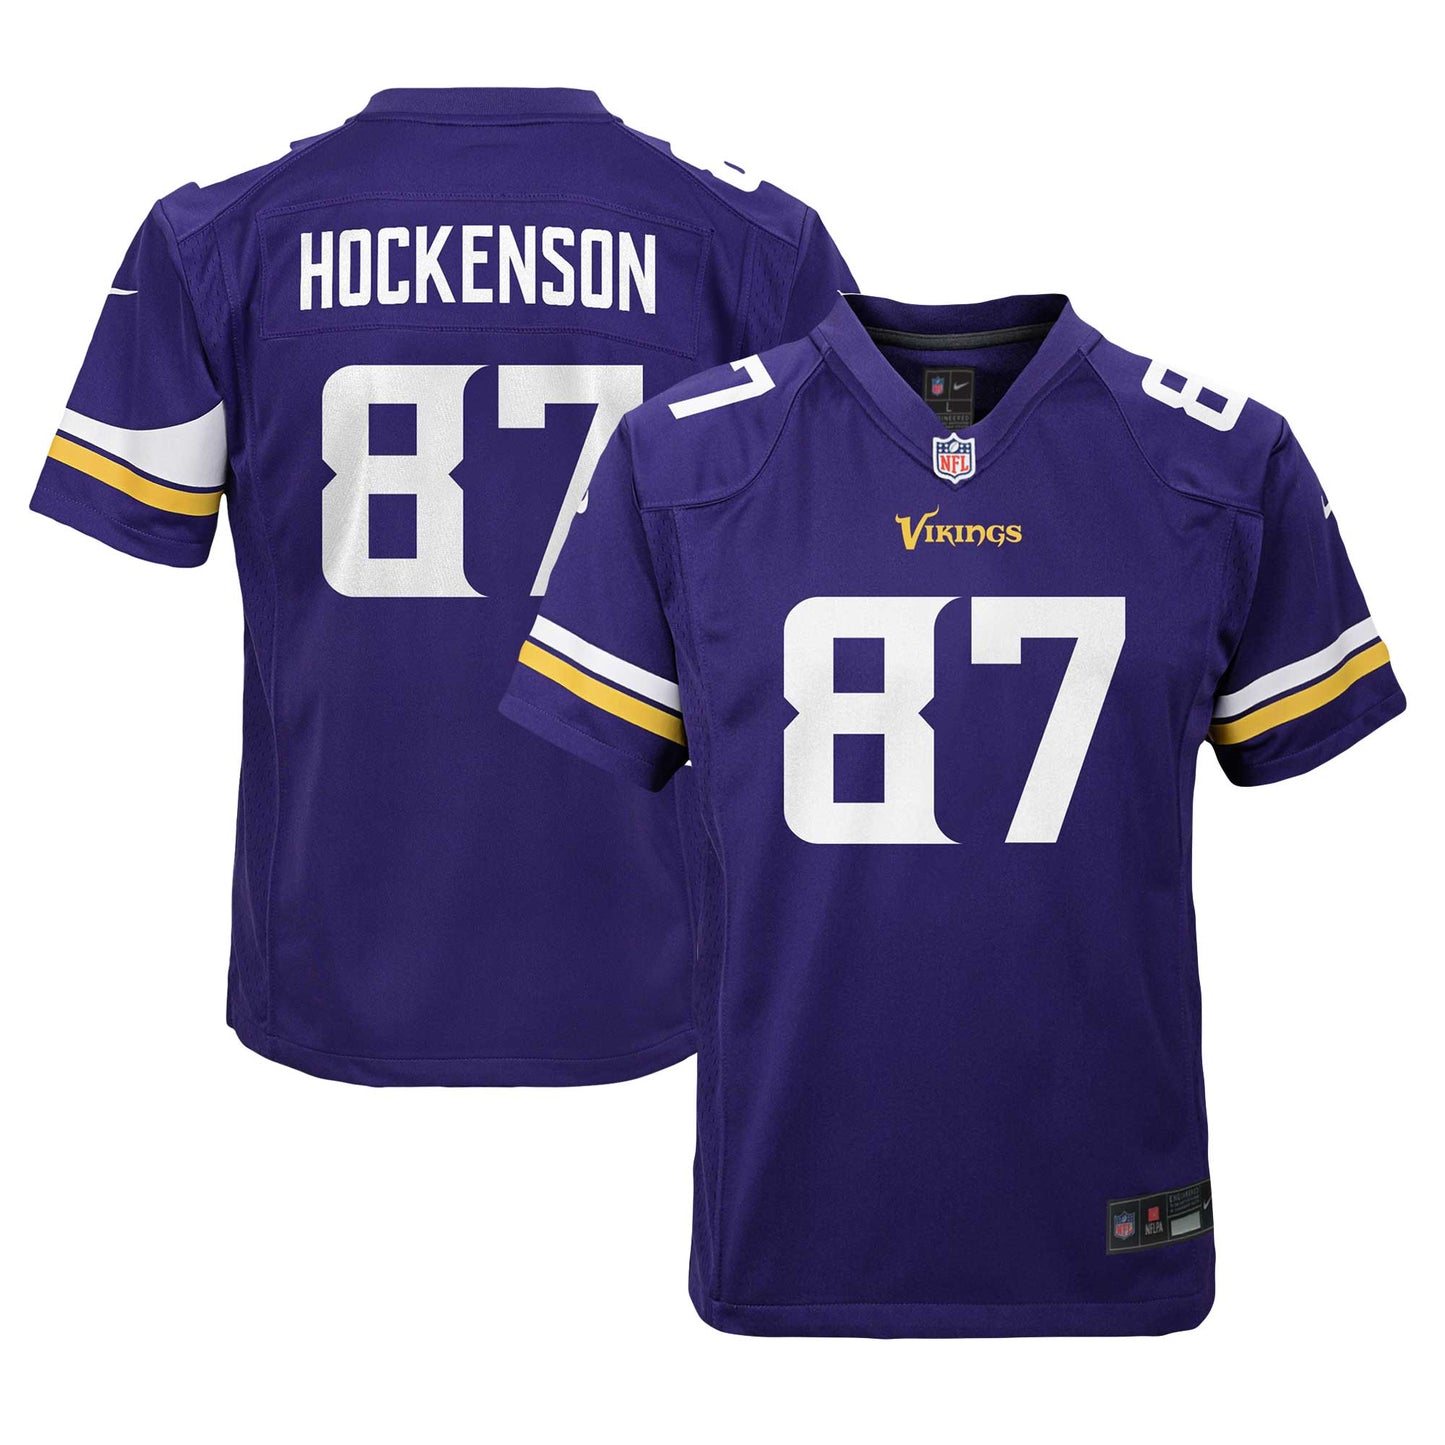 T.J. Hockenson Minnesota Vikings Nike Youth Game Jersey - Purple